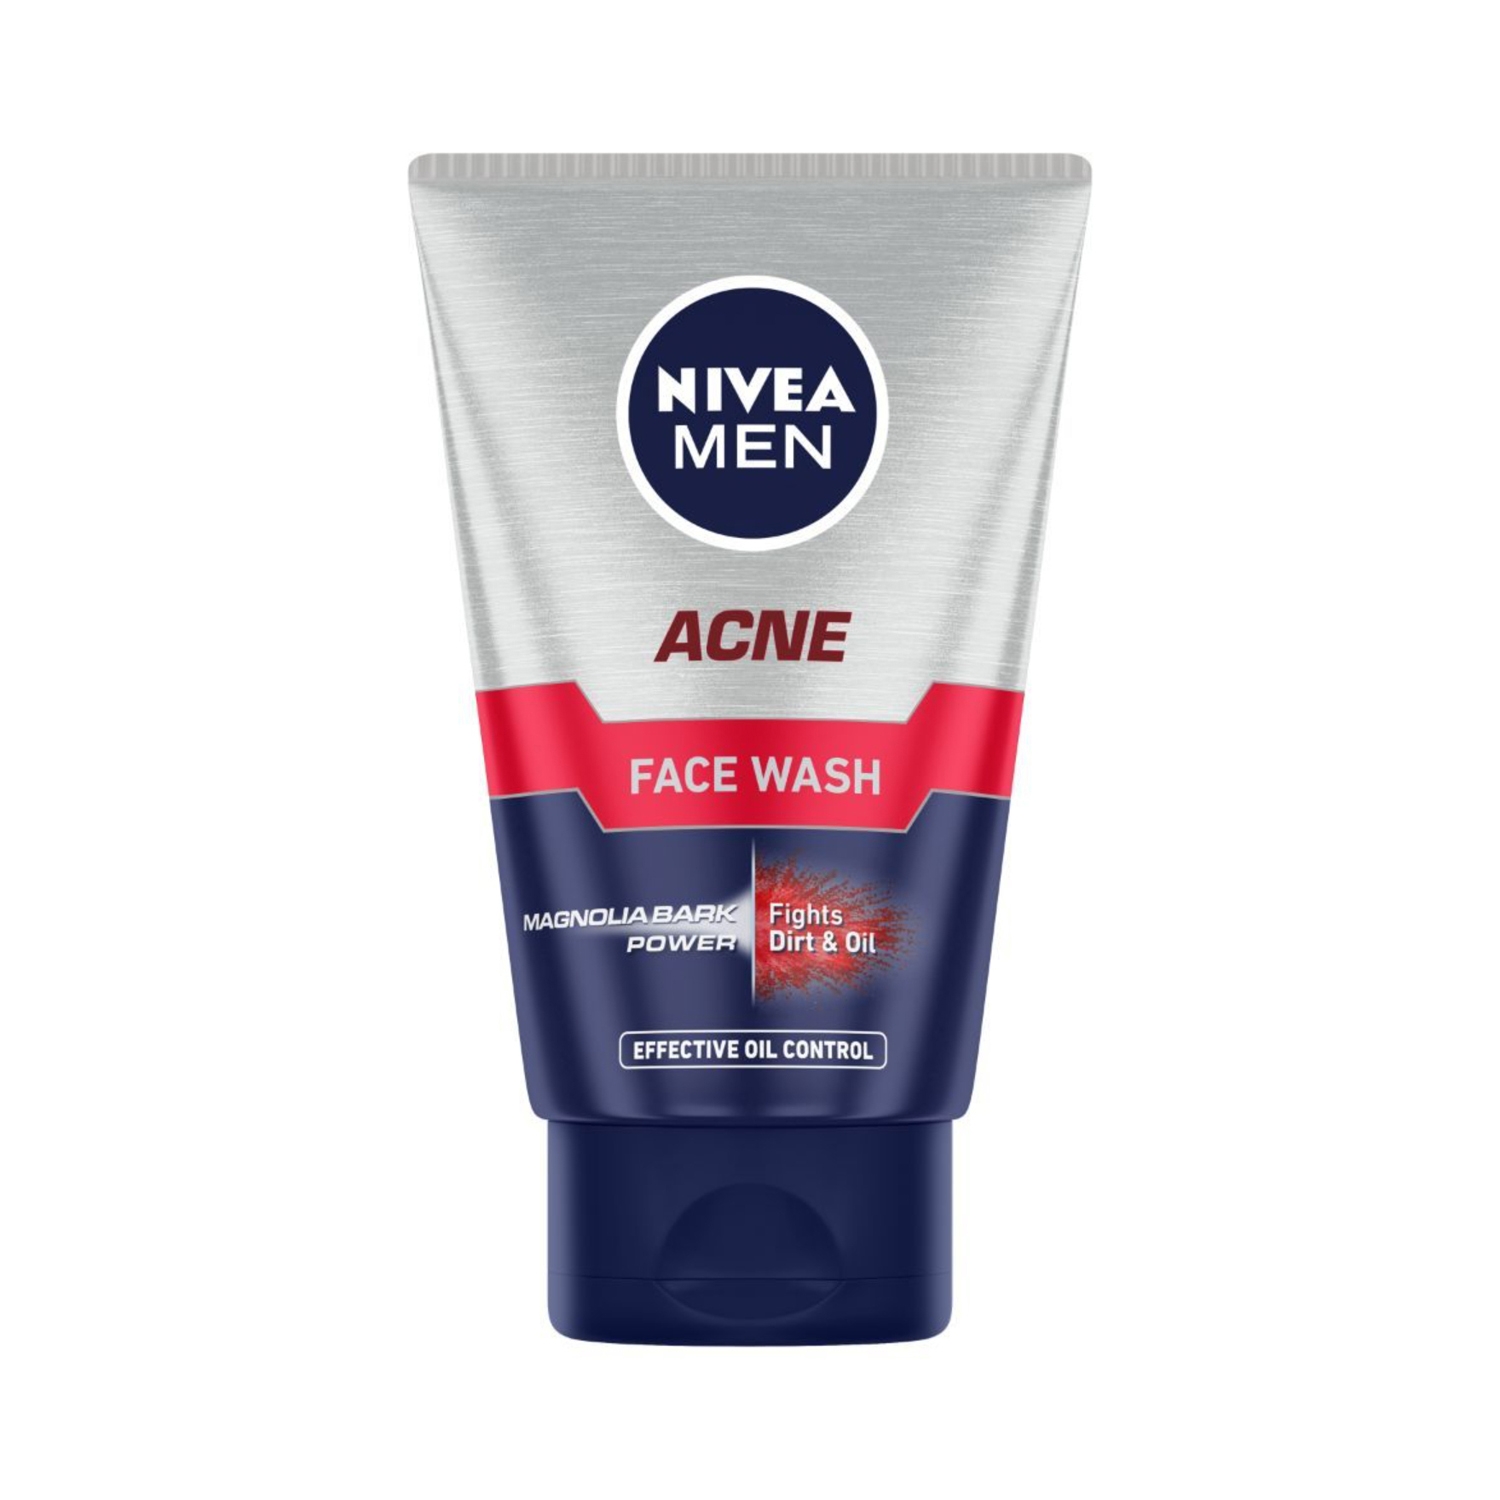 Nivea Men Cleansing Acne Facewash (100g)